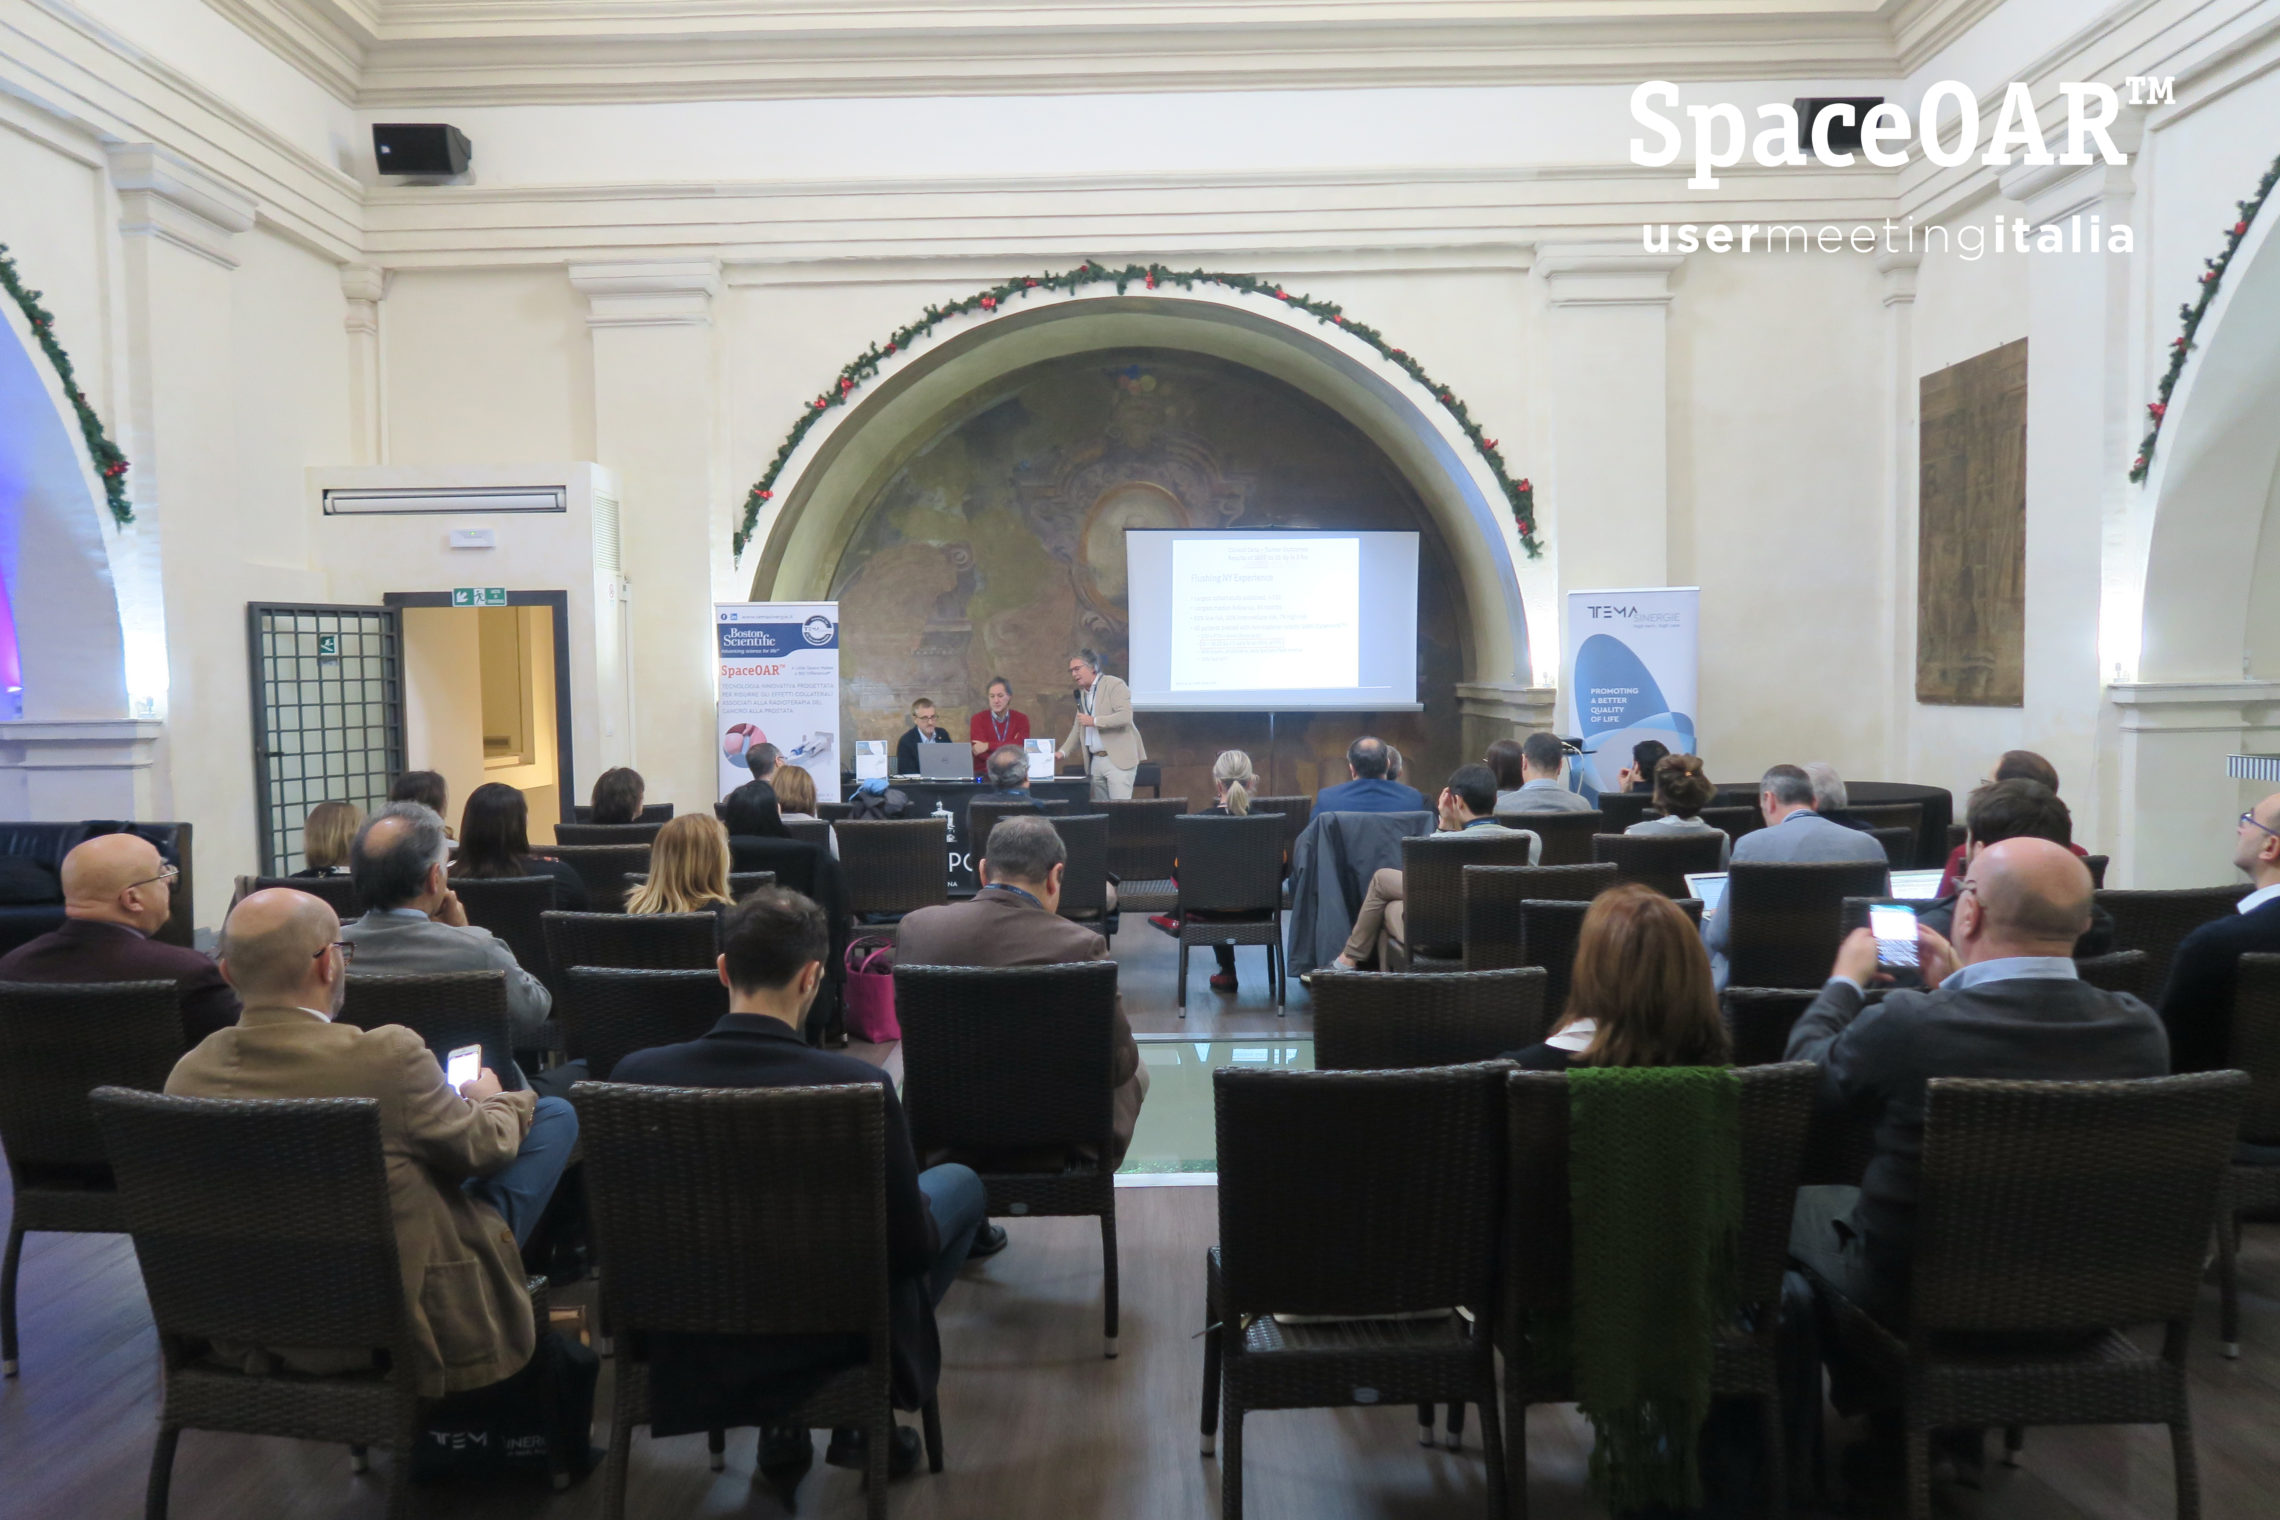 Sanguineti - Presentation at SpaceOAR User Meeting Italia